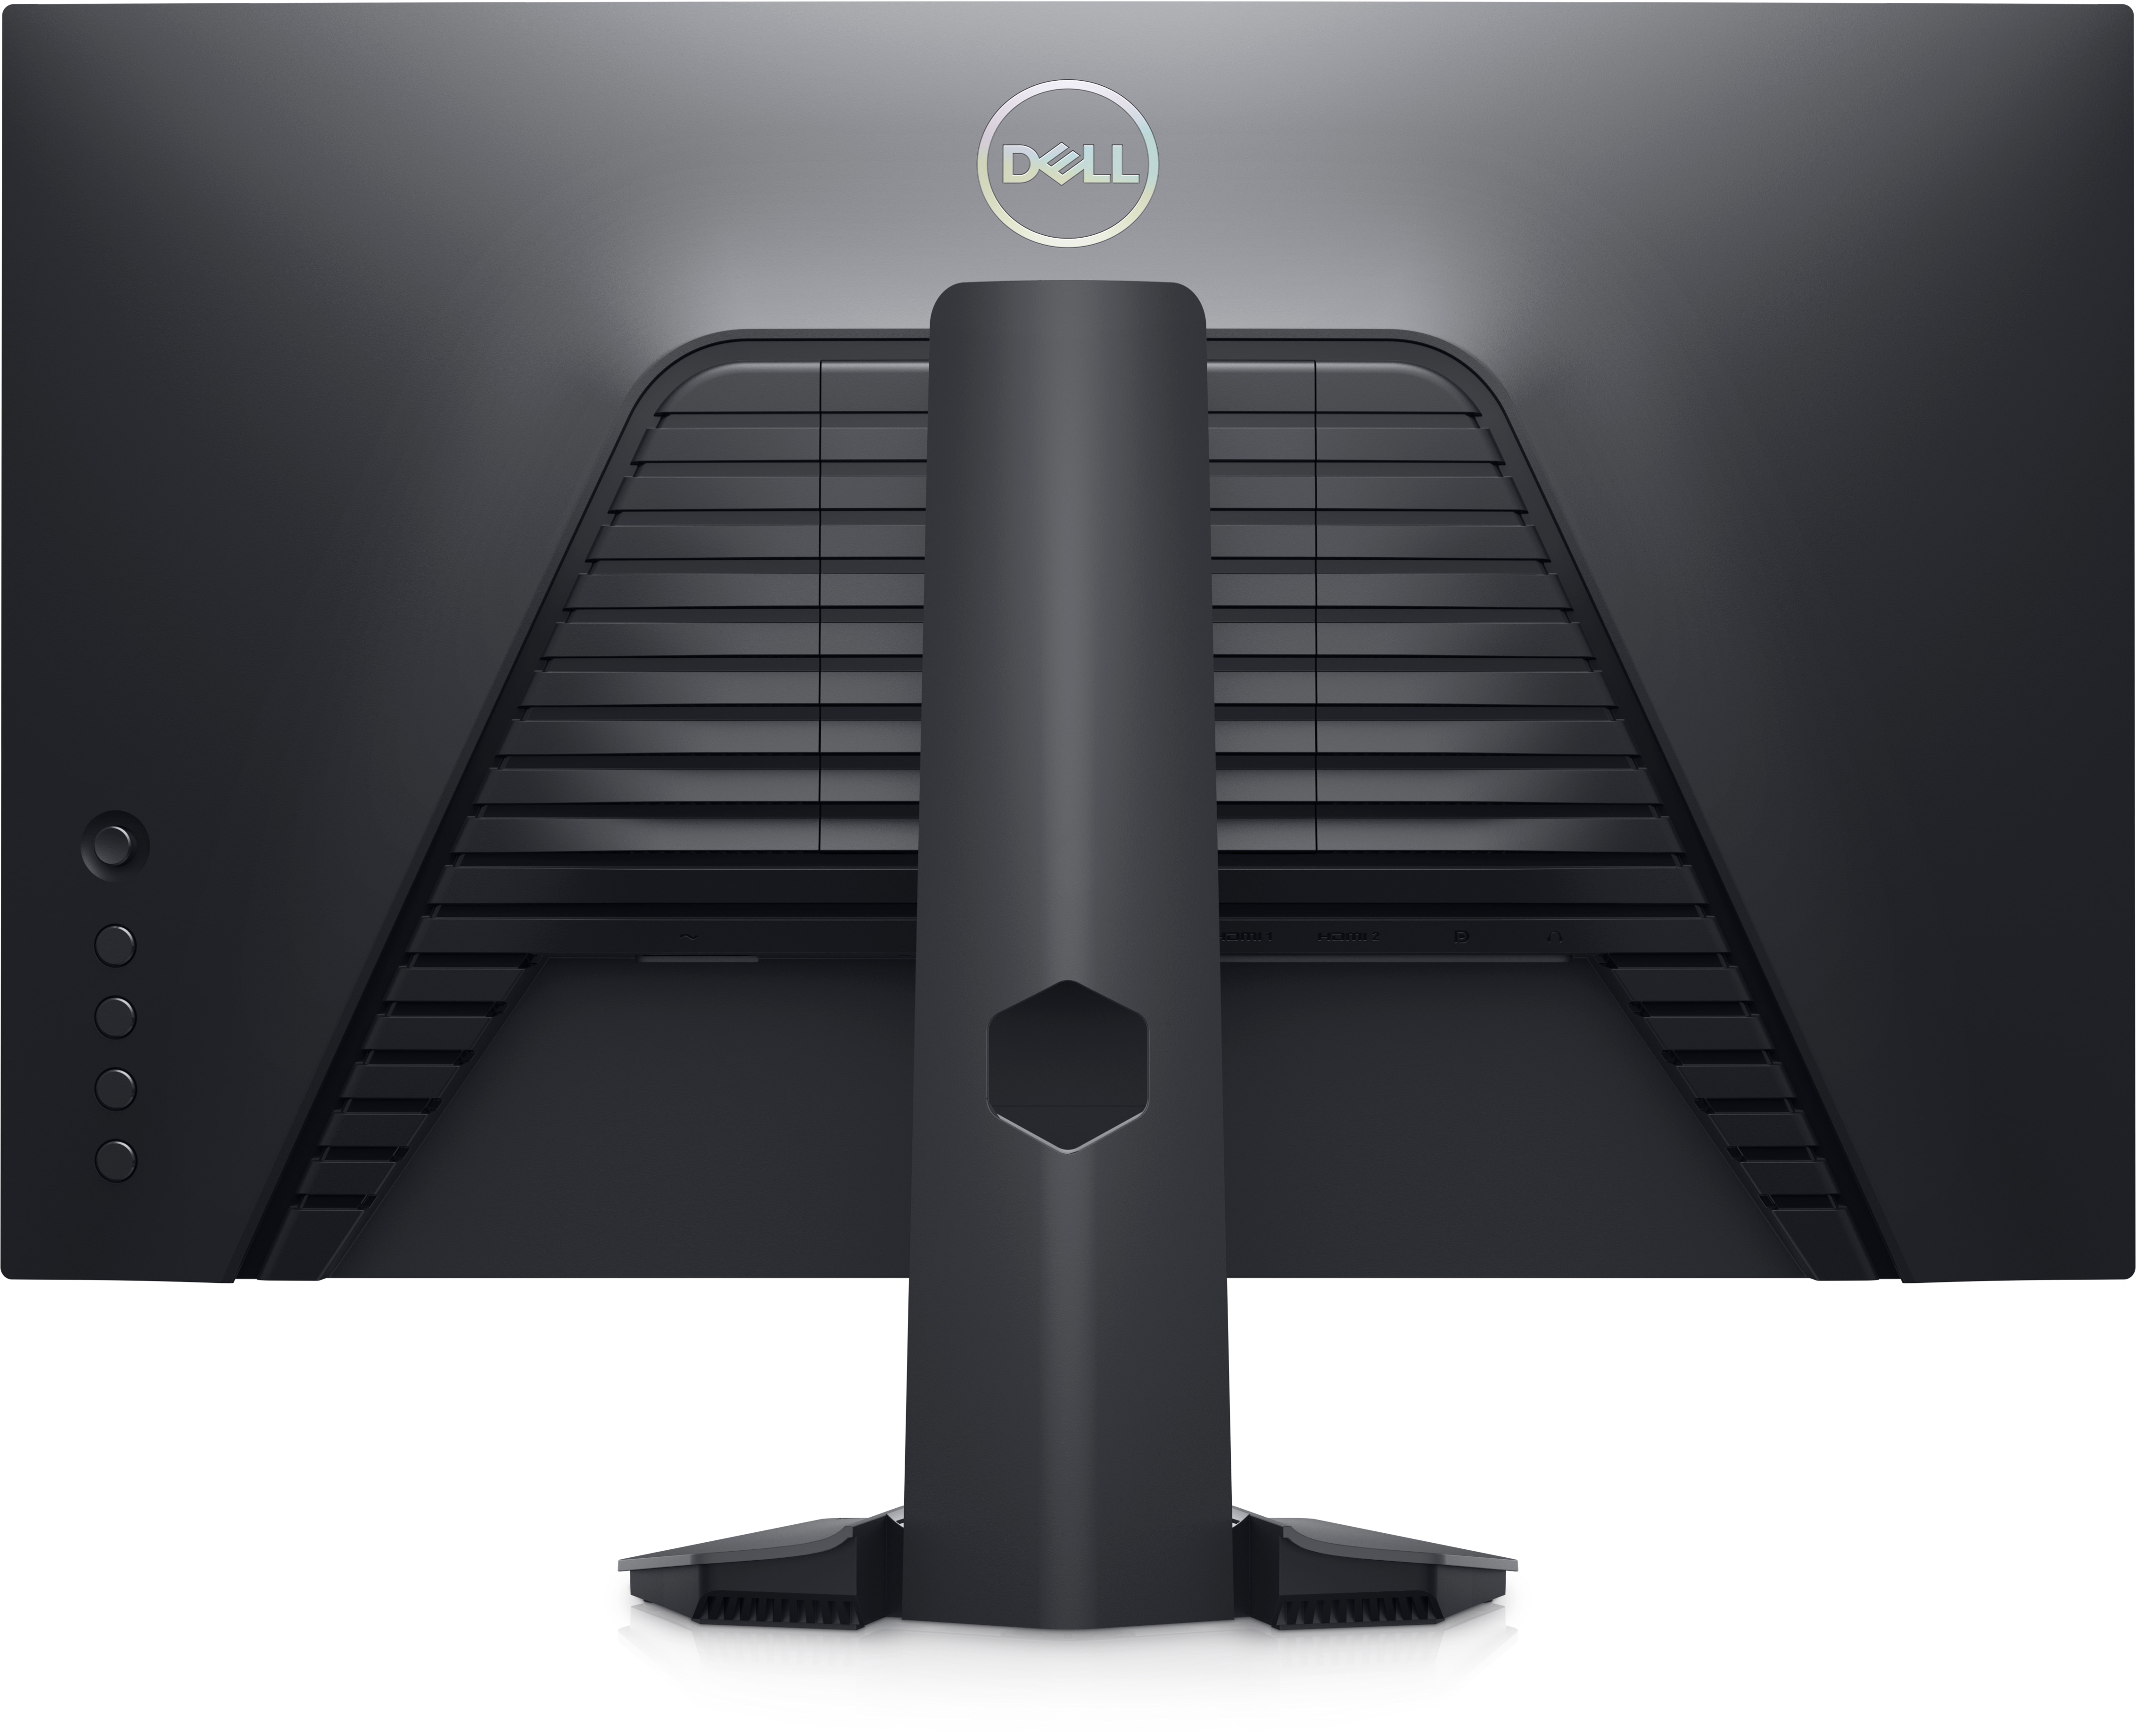 Dell 24 Inch Gaming Monitor - G2422HS : Computer Monitors | Dell USA